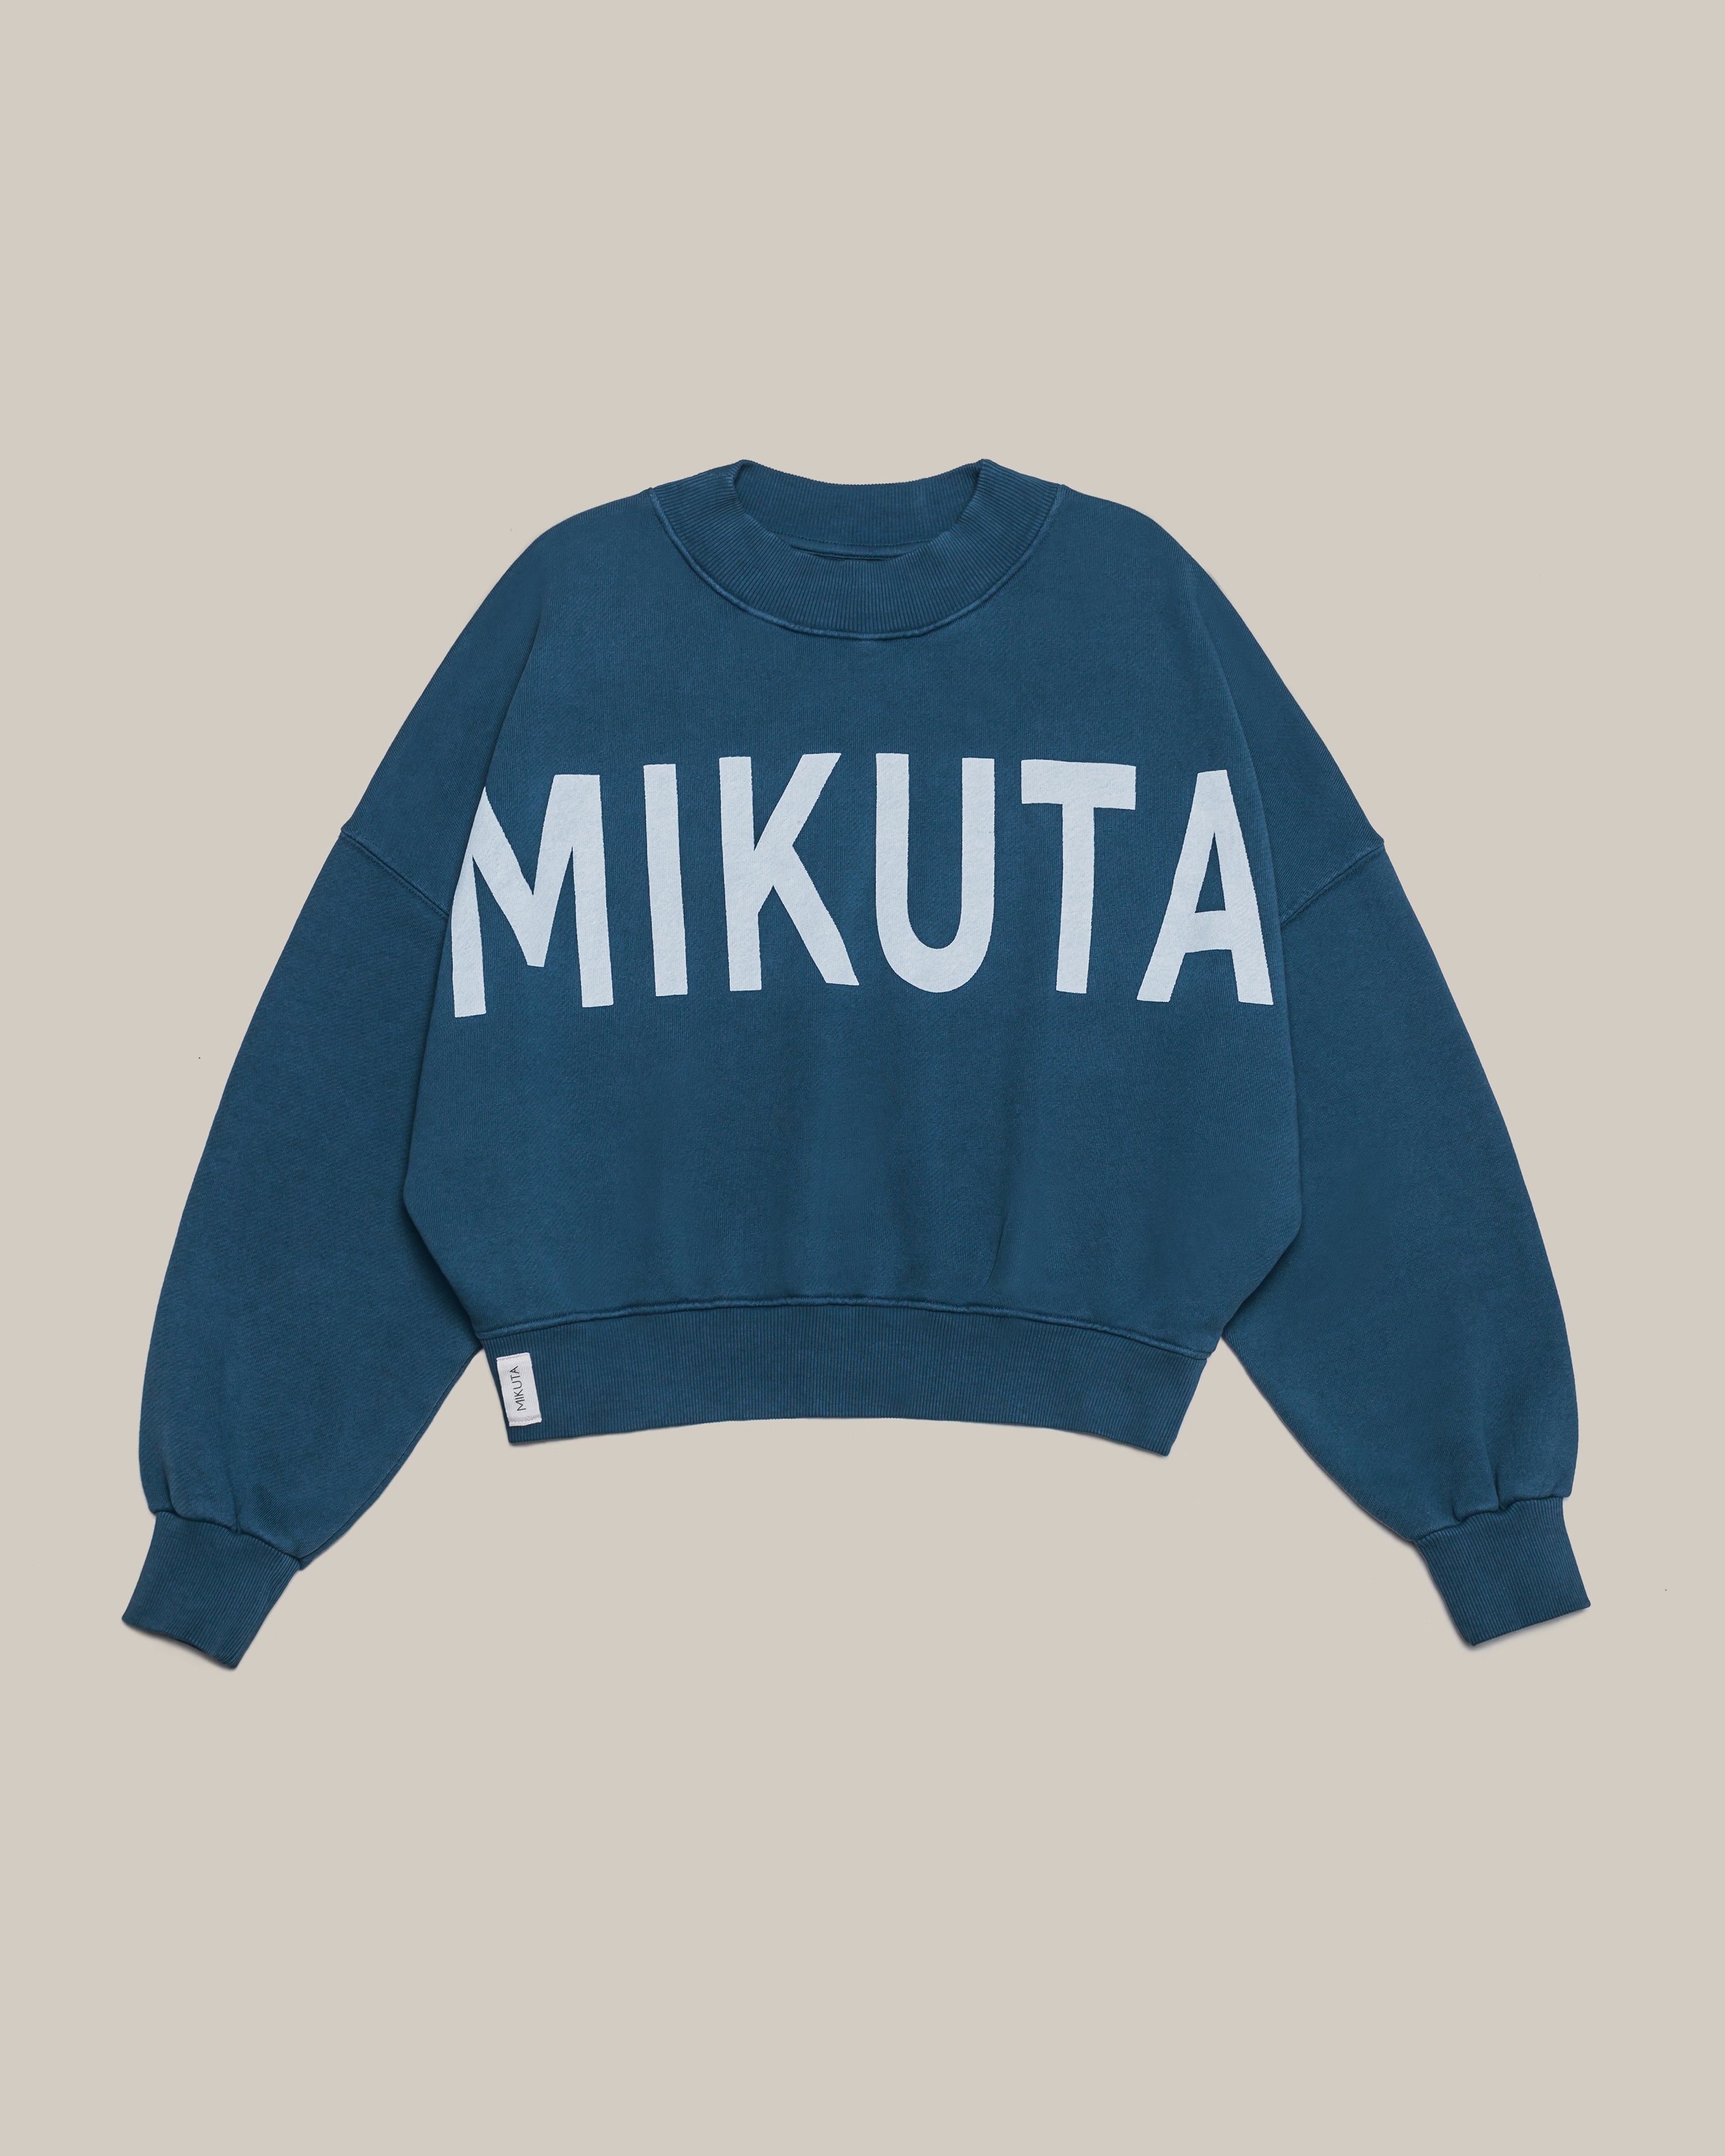 The Blue Mikuta Sweater